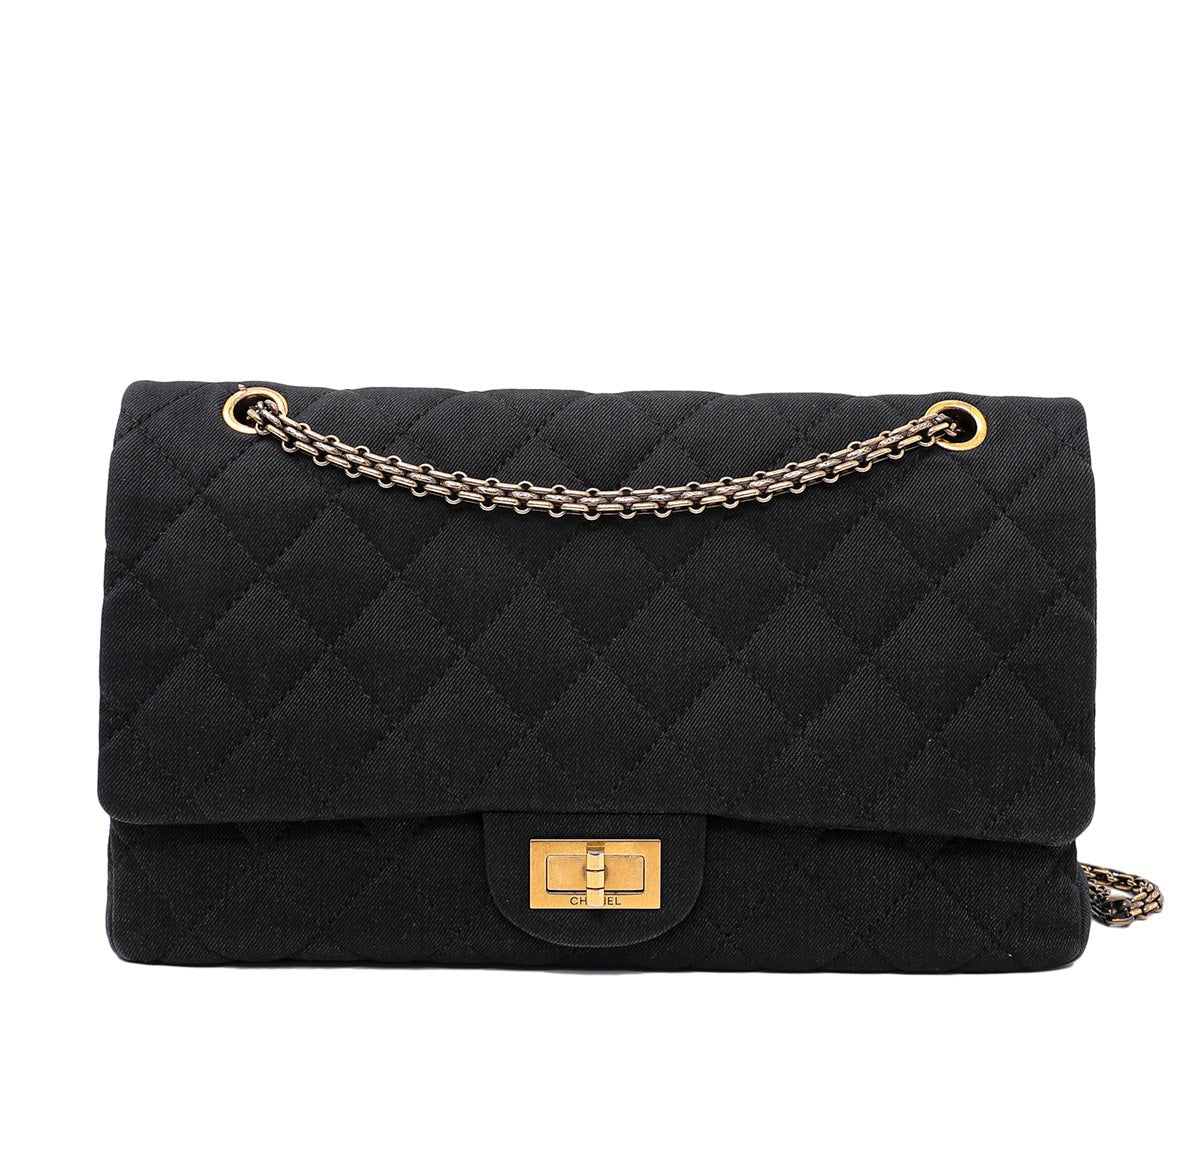 The Closet - Chanel Black 2.55 Reissue 227 Classic Jersey Flap Bag | The Closet